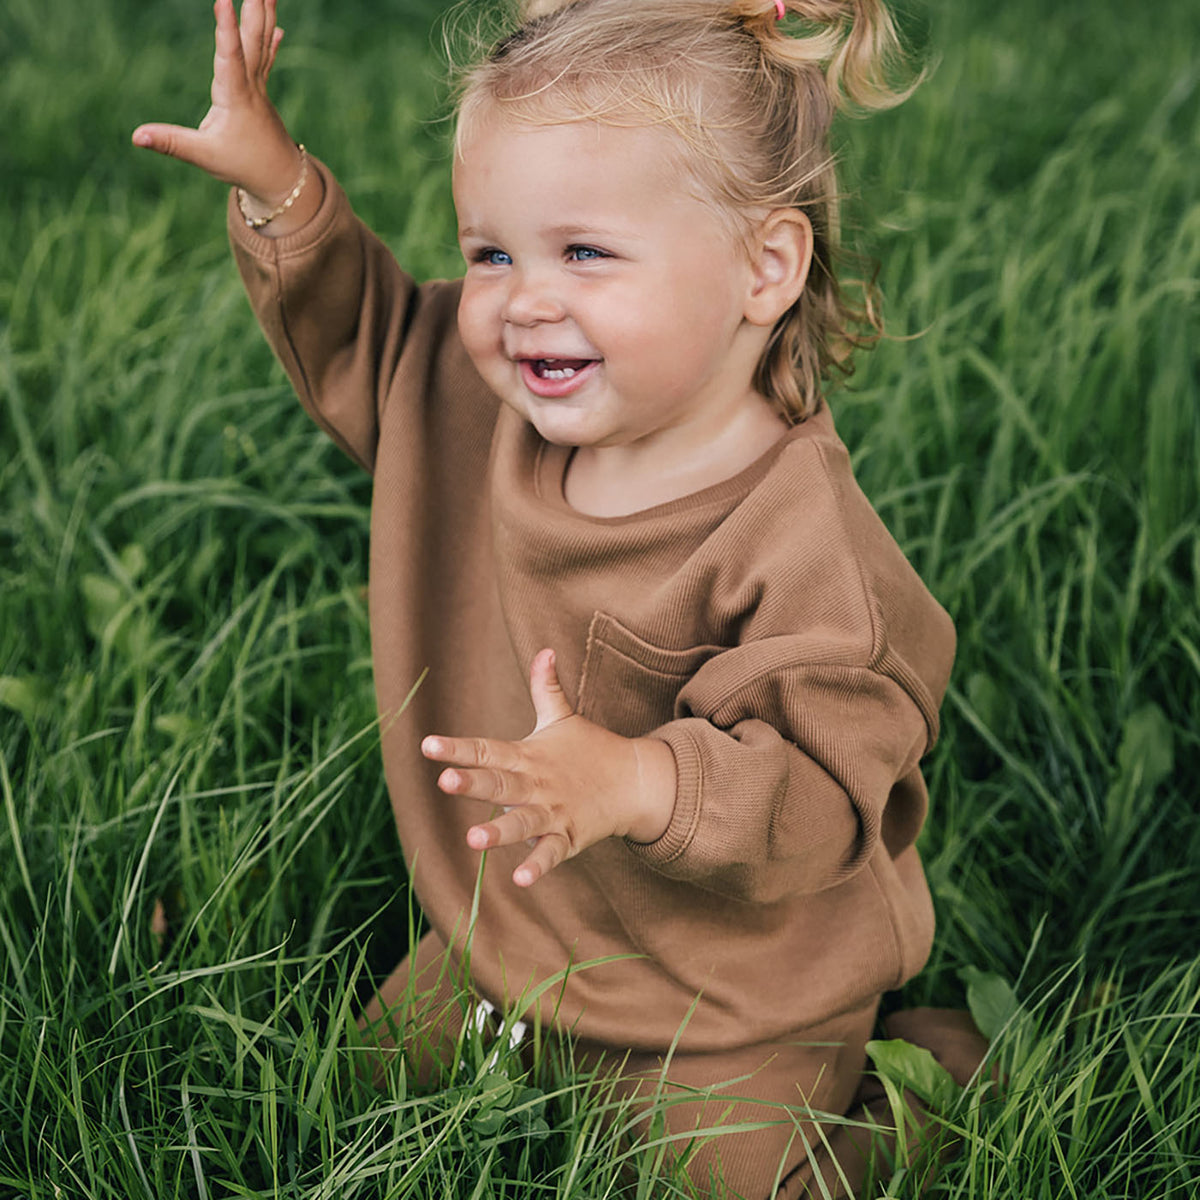 little girl kneeling in grass waving, wearing uaua sweater in chocolate